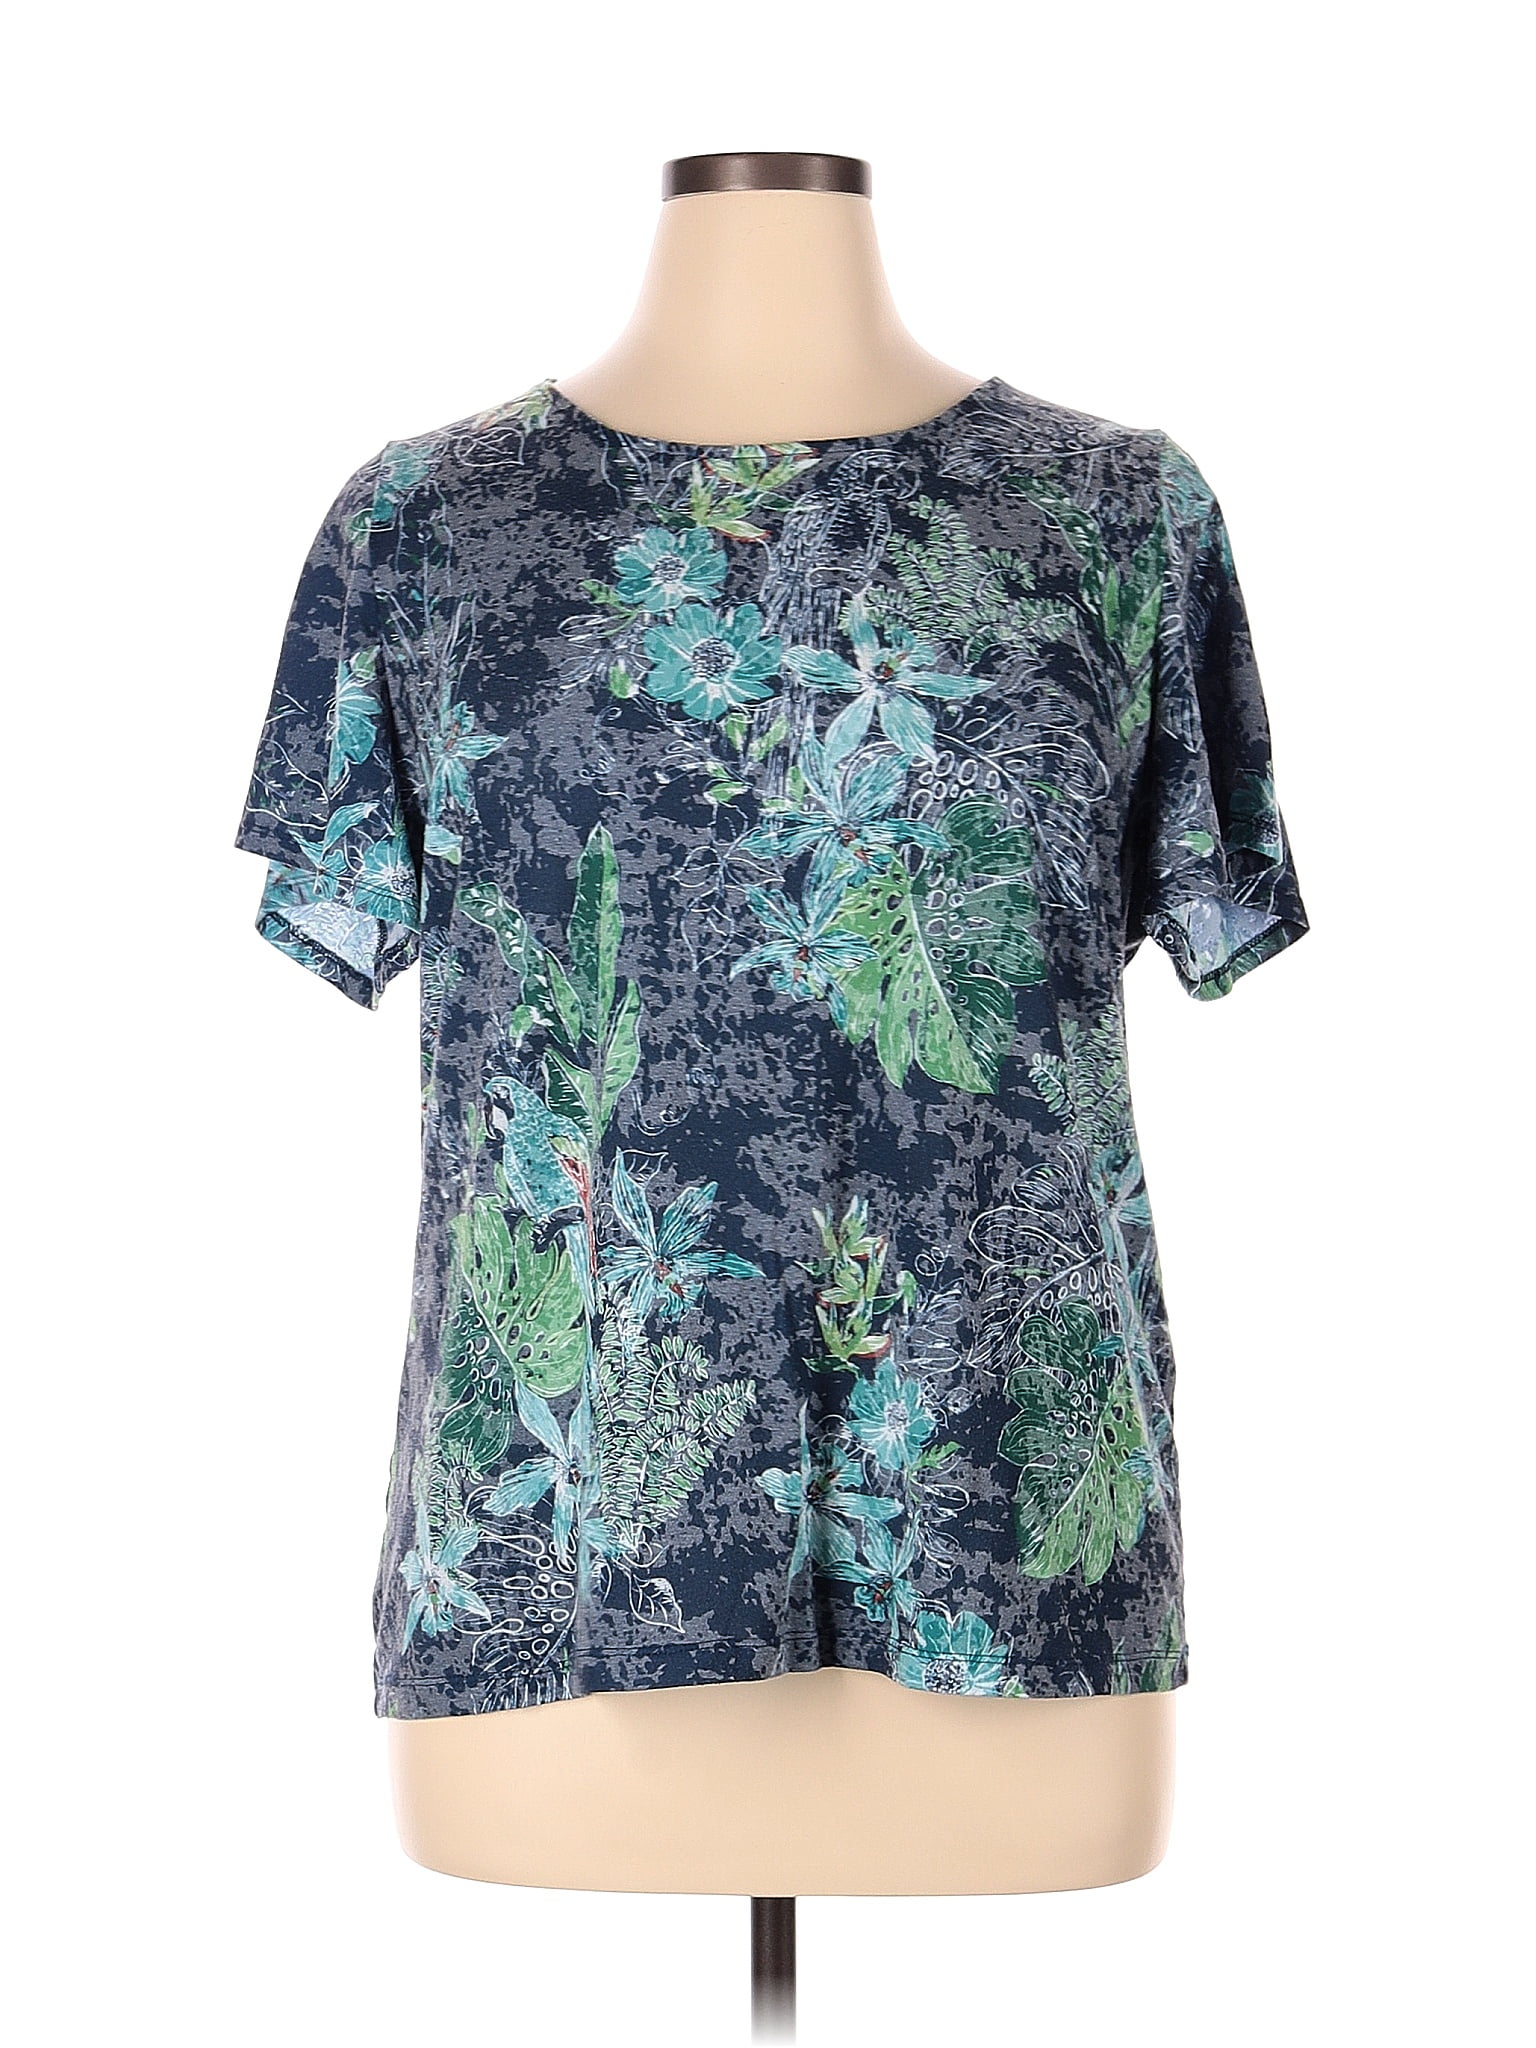 Christopher Banks Shirt Woman's Lg 3/4 Sleeve Multicolor Cotton